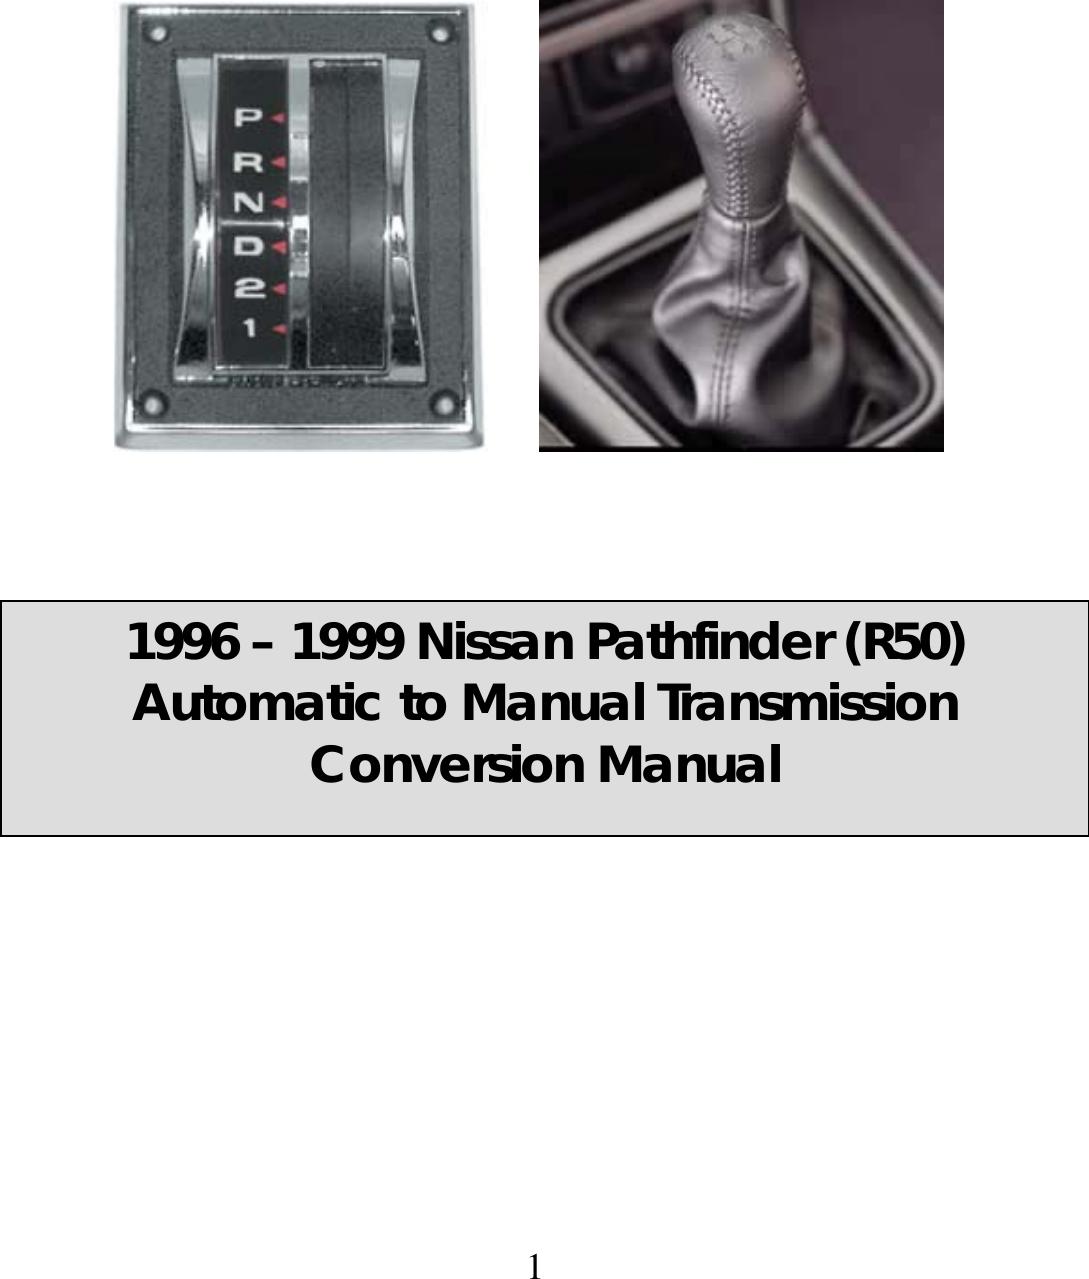 Nissan Pathfinder R50 Users Manual Transmission Conversion